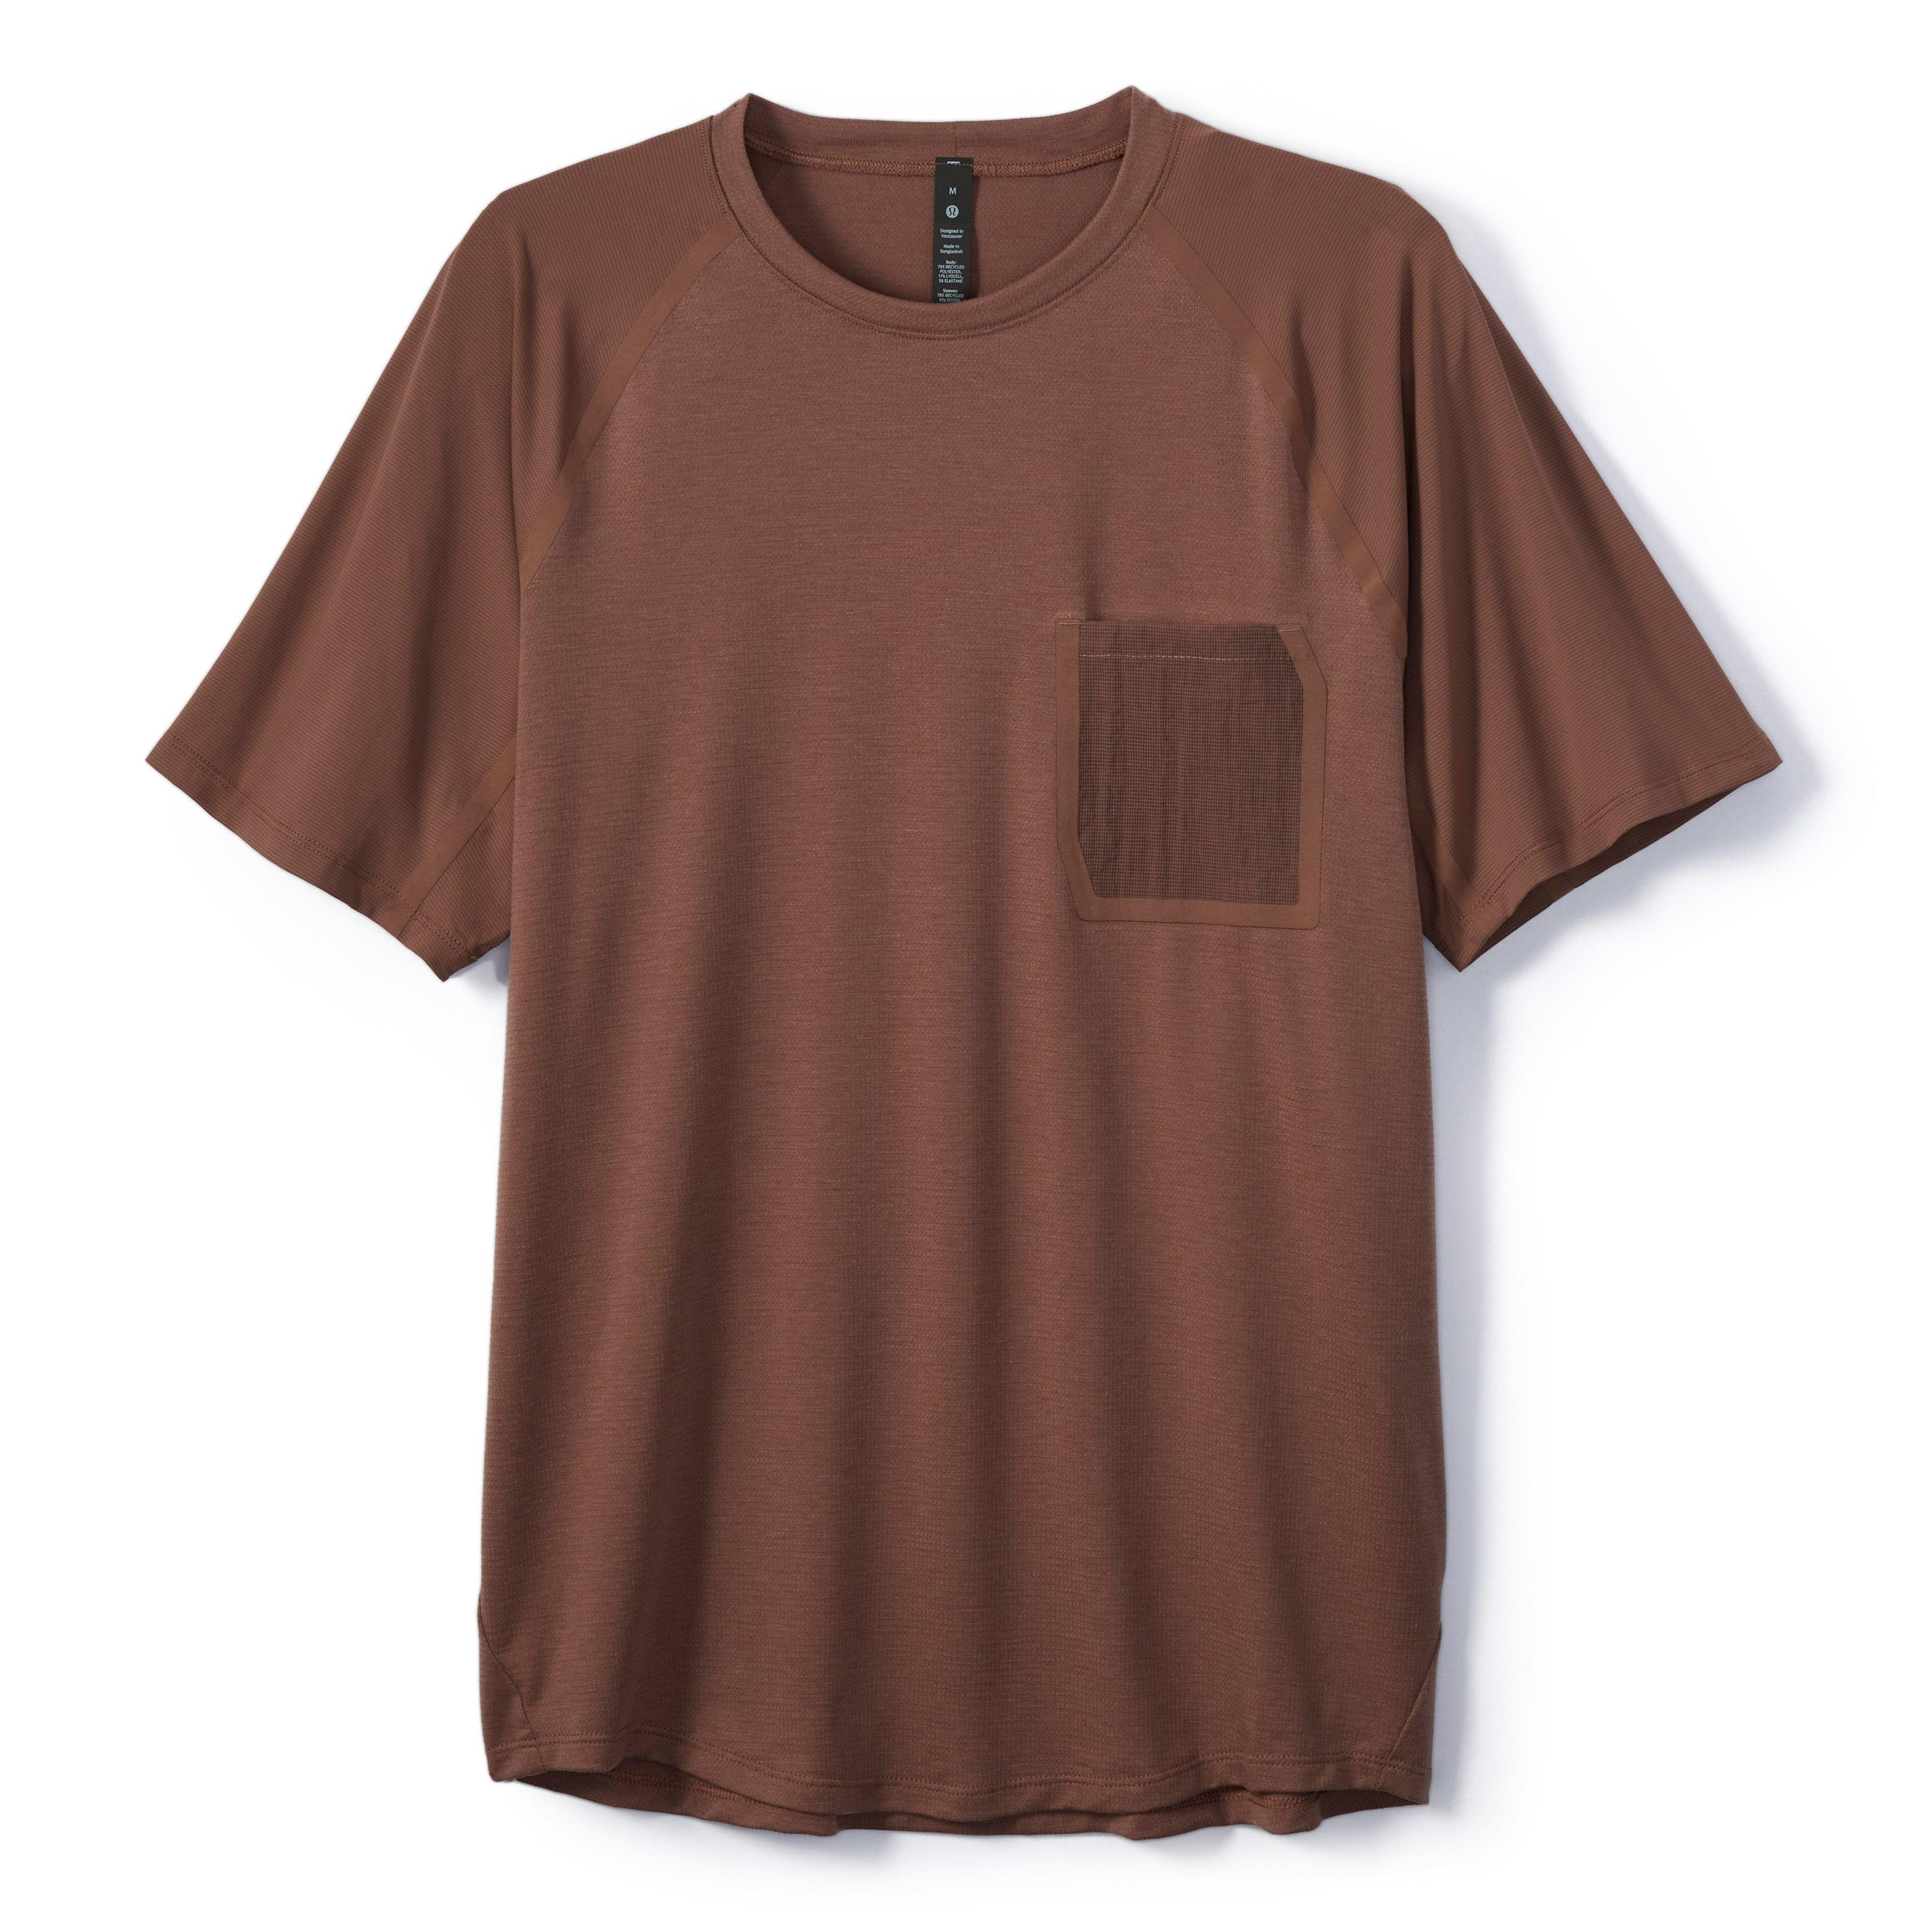 lululemon Ventilated Hiking Short Sleeve Shirt - Dark Oxide